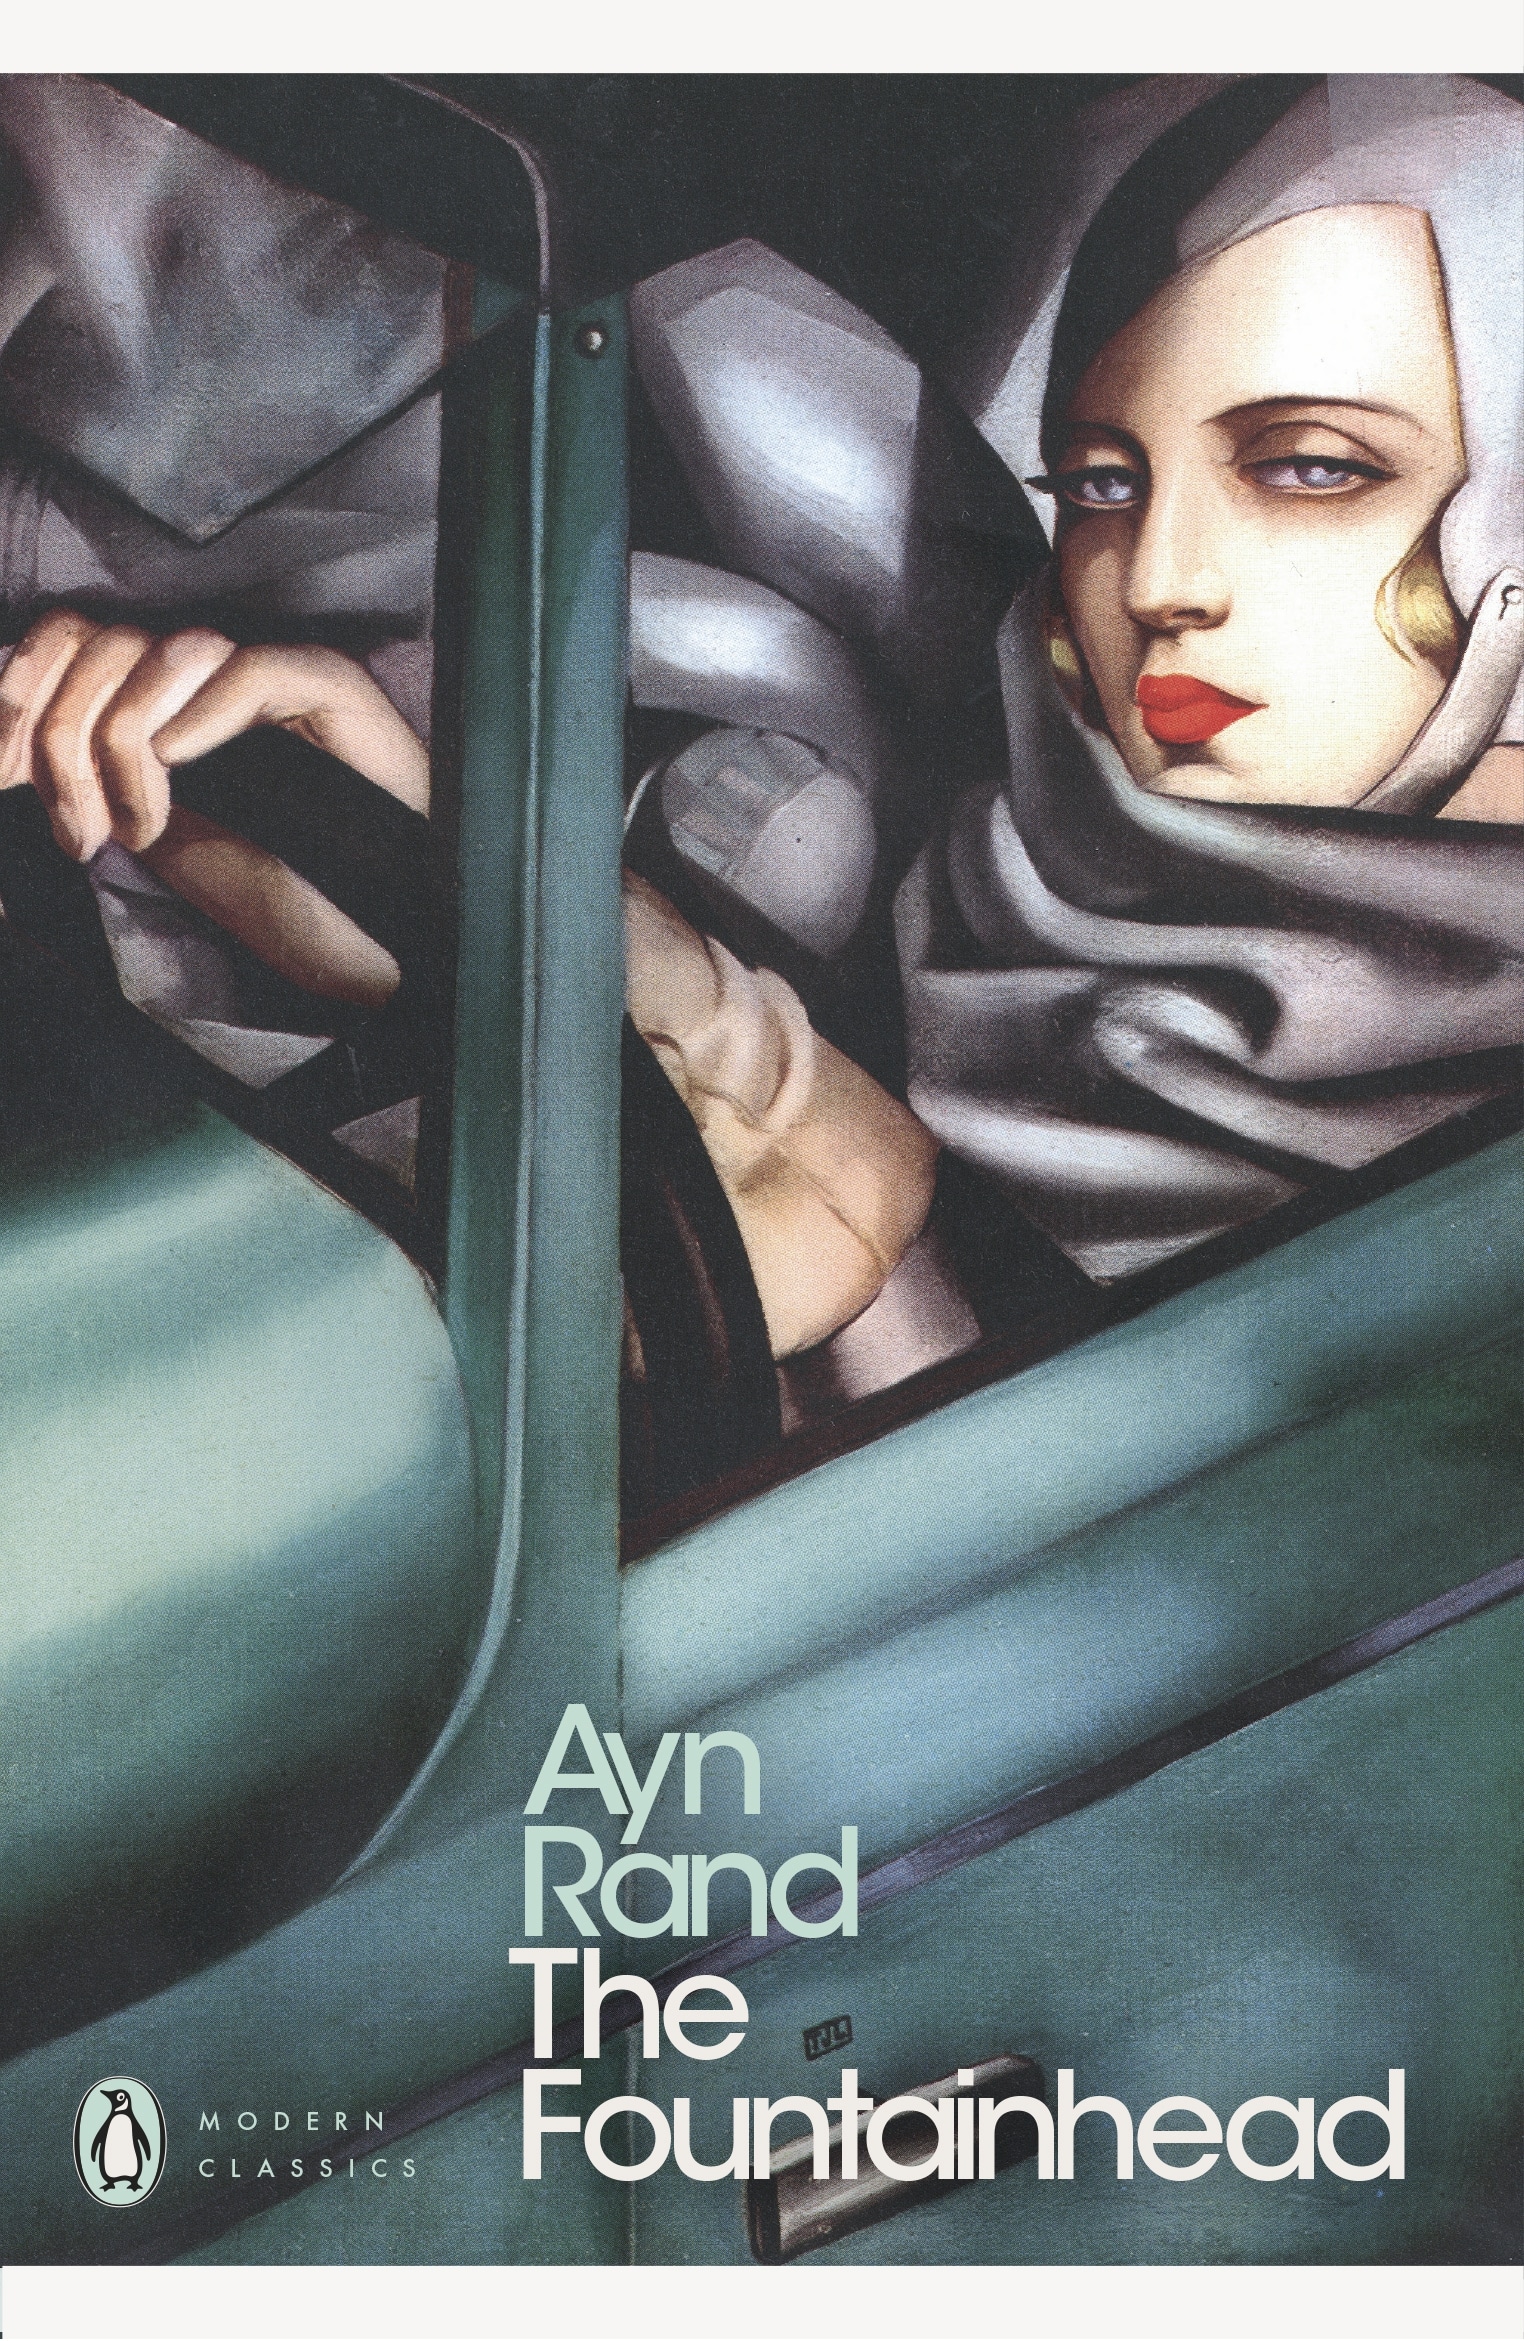 Book “The Fountainhead” by Ayn Rand